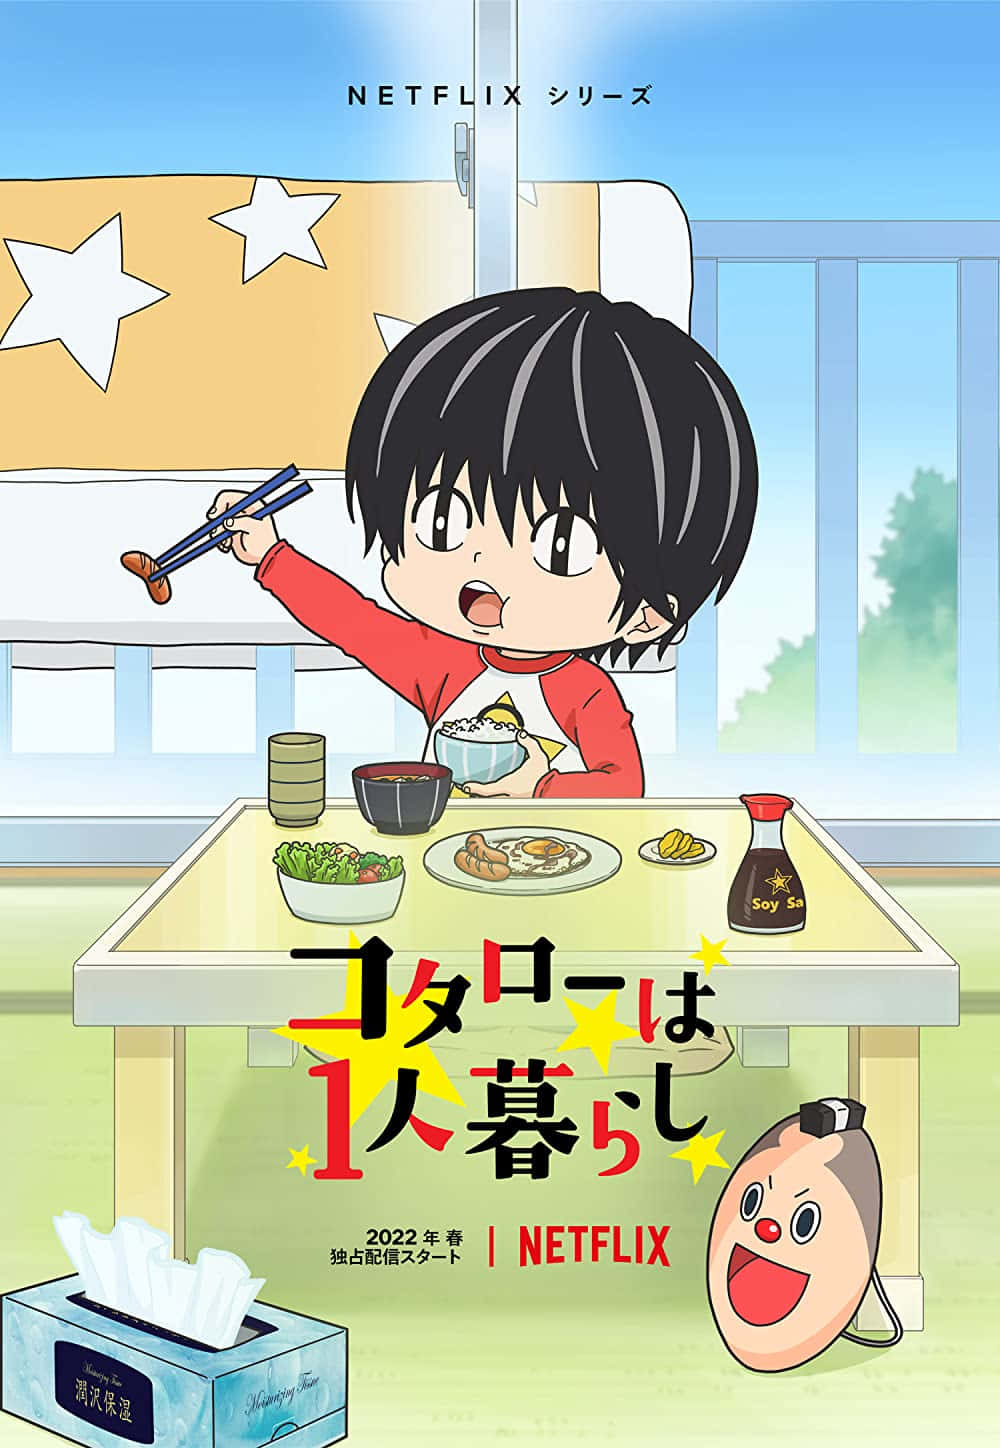 A Poster For The Anime Series Sakura Sakura